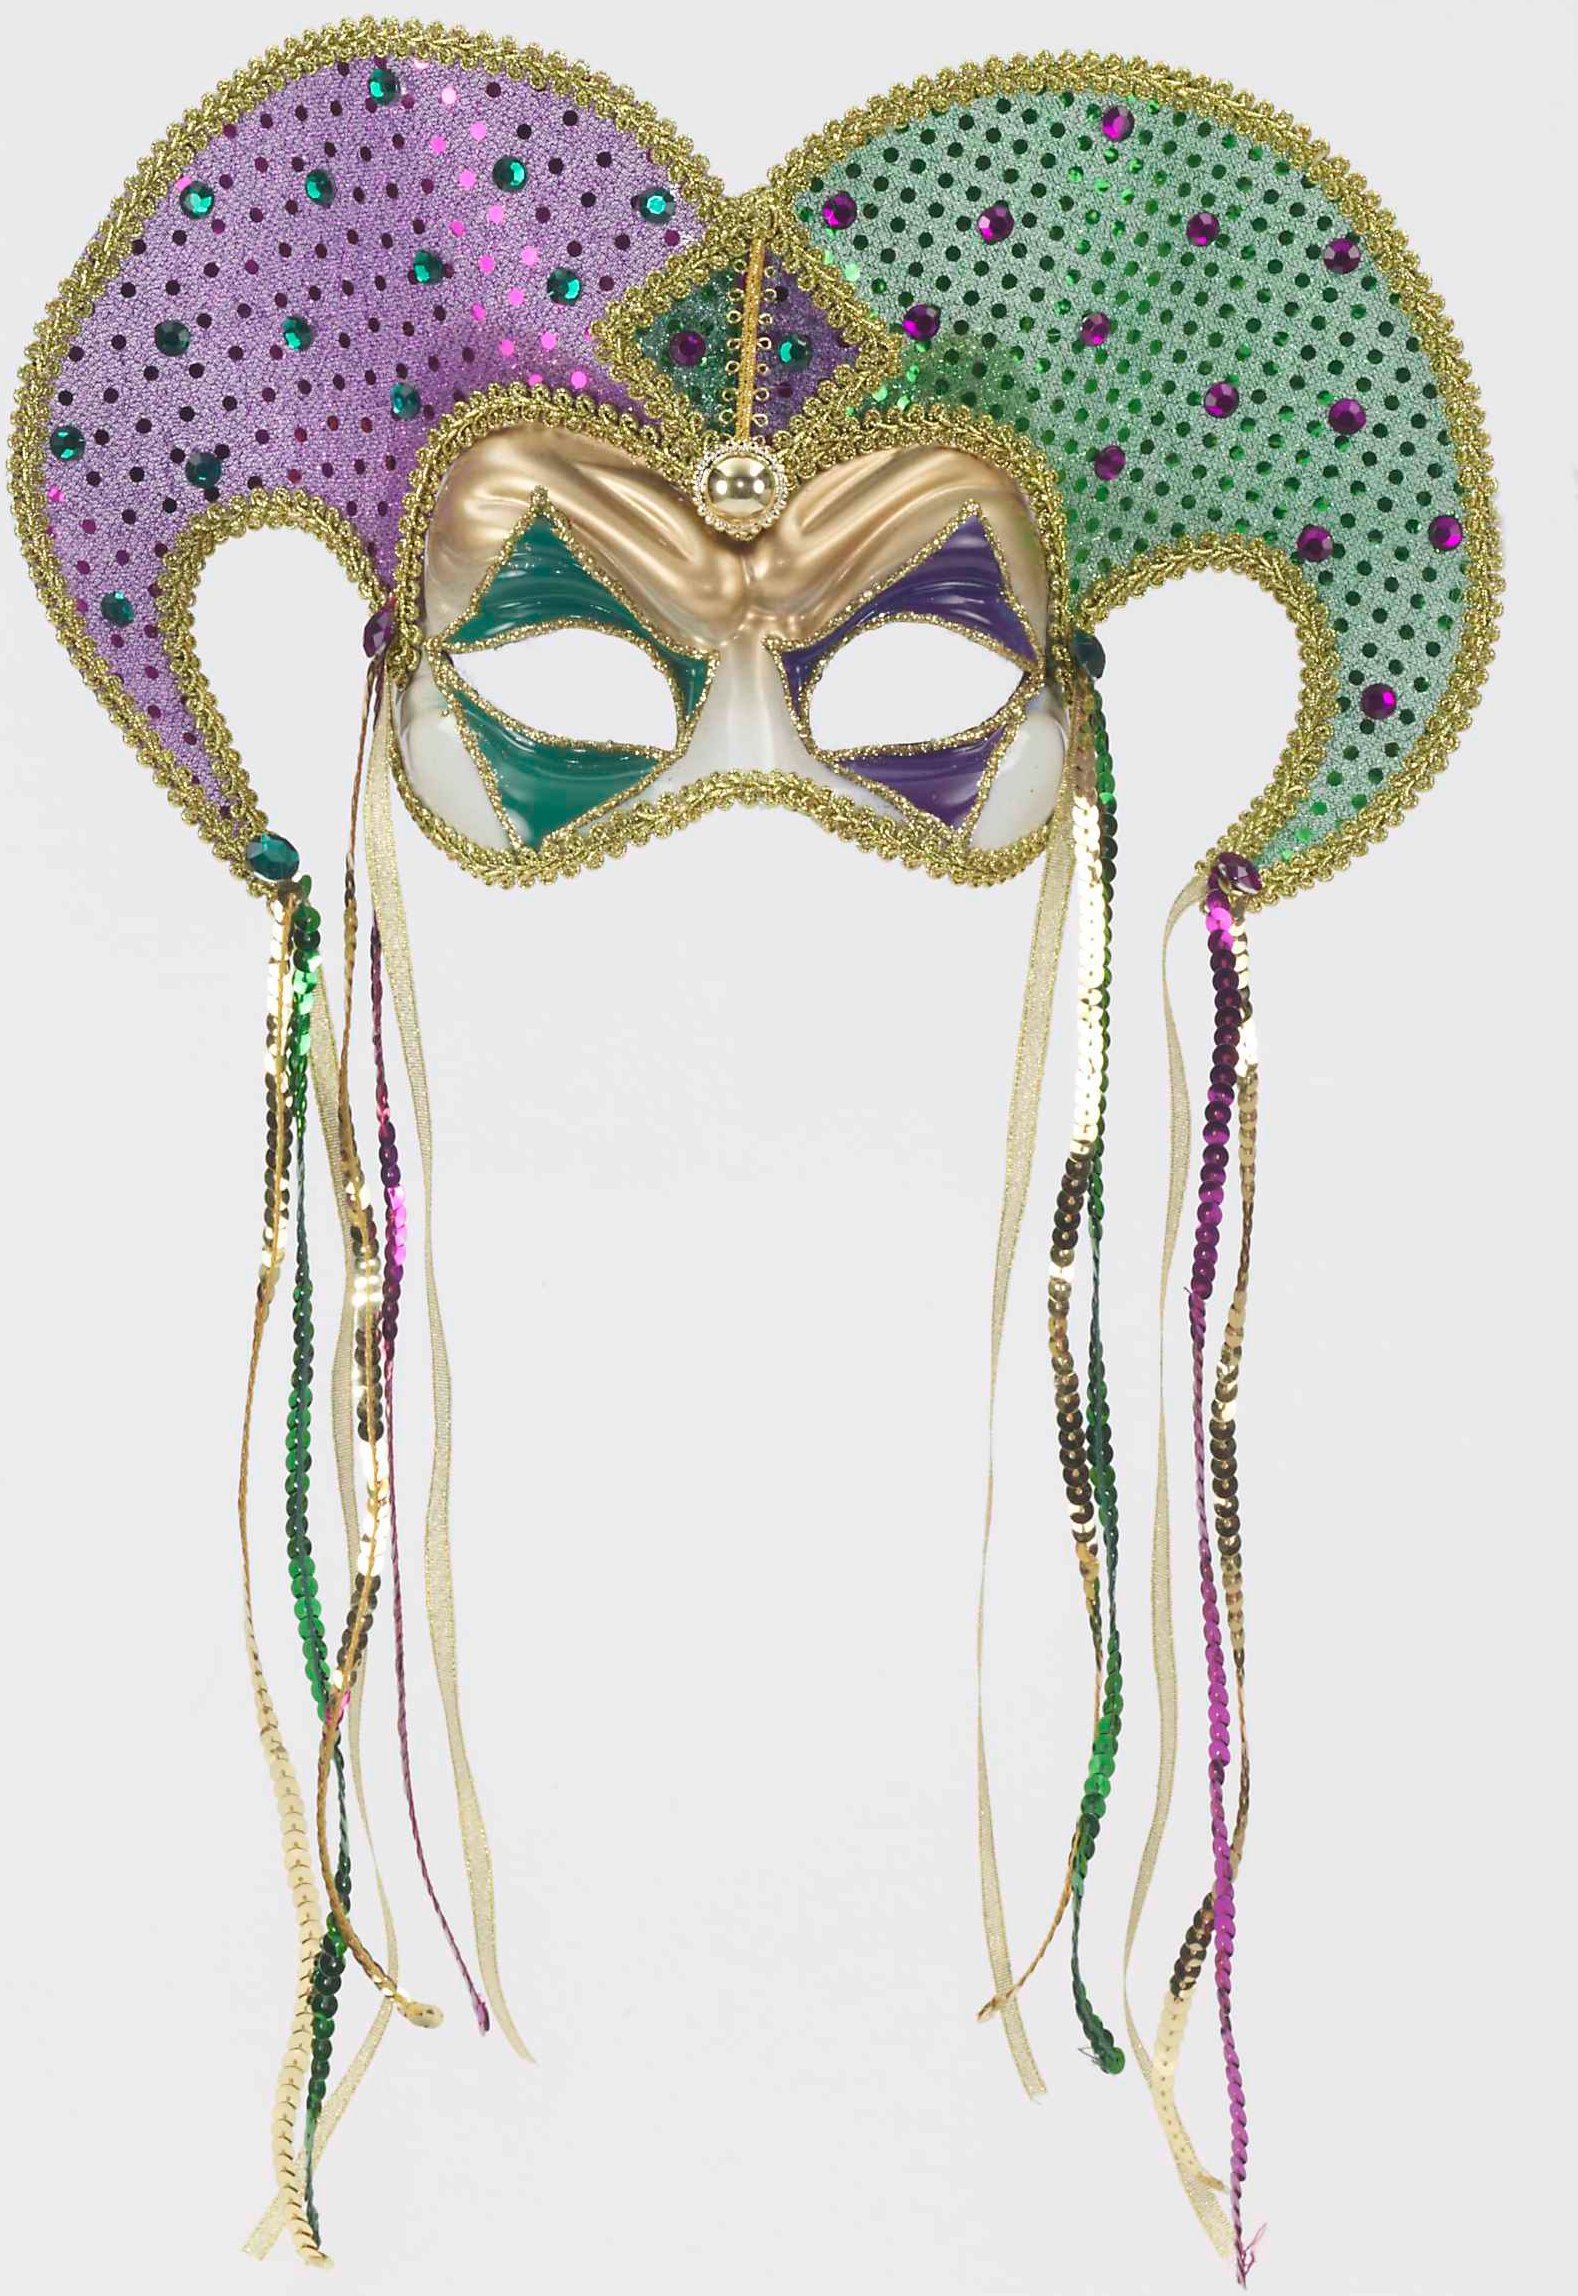 Mardi Gras Venetian Mask Adult